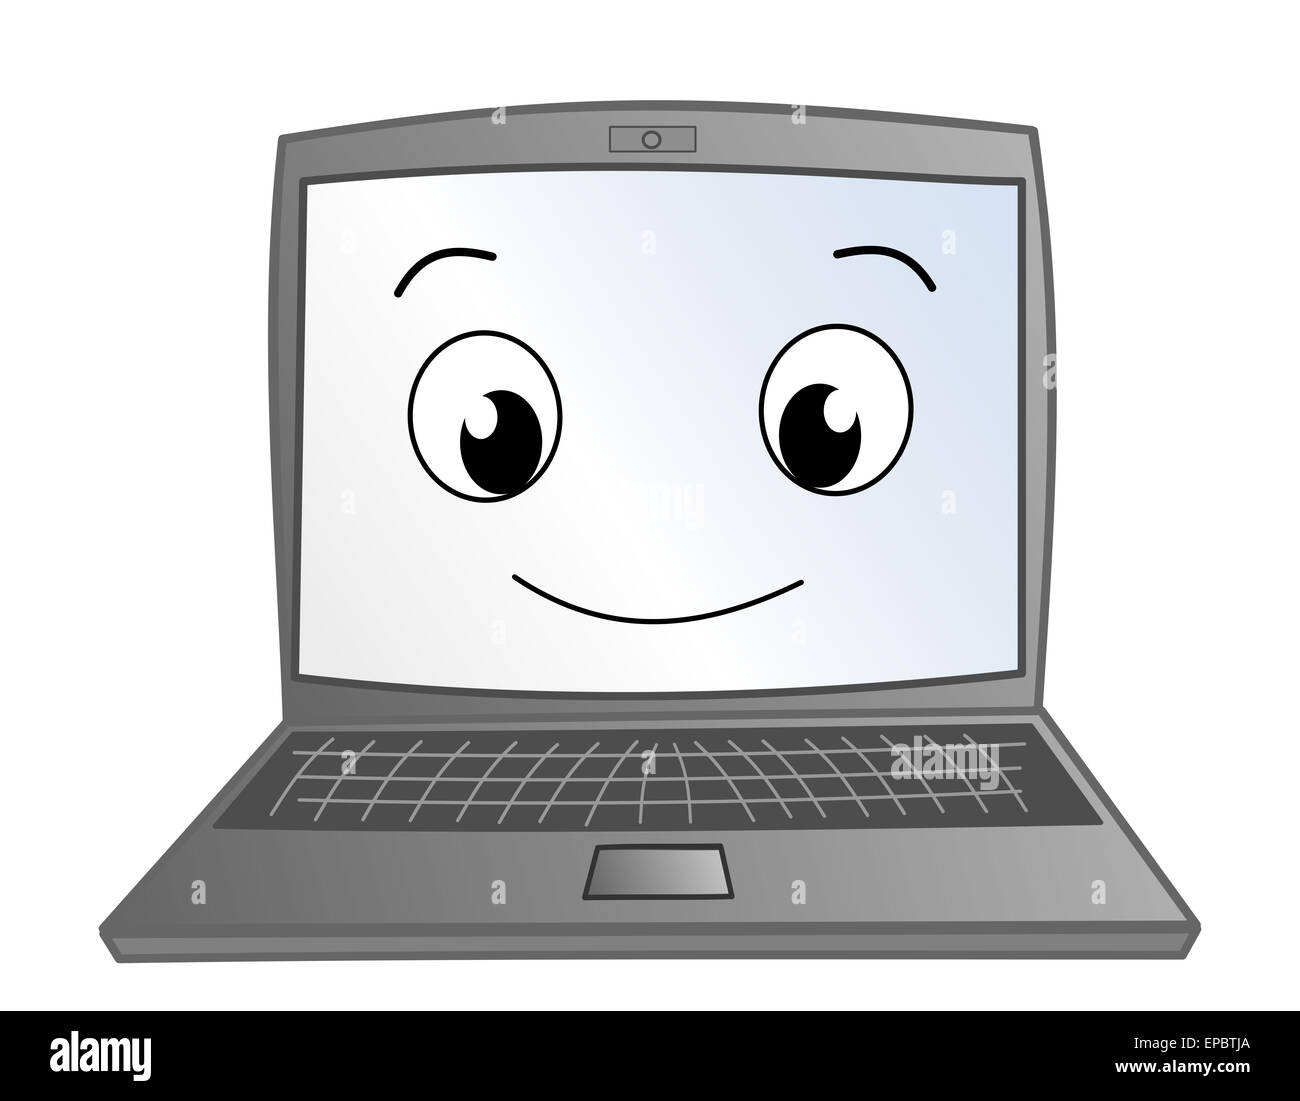 Lustig Niedlich Laptop Cartoon Illustration Stockfotografie Alamy